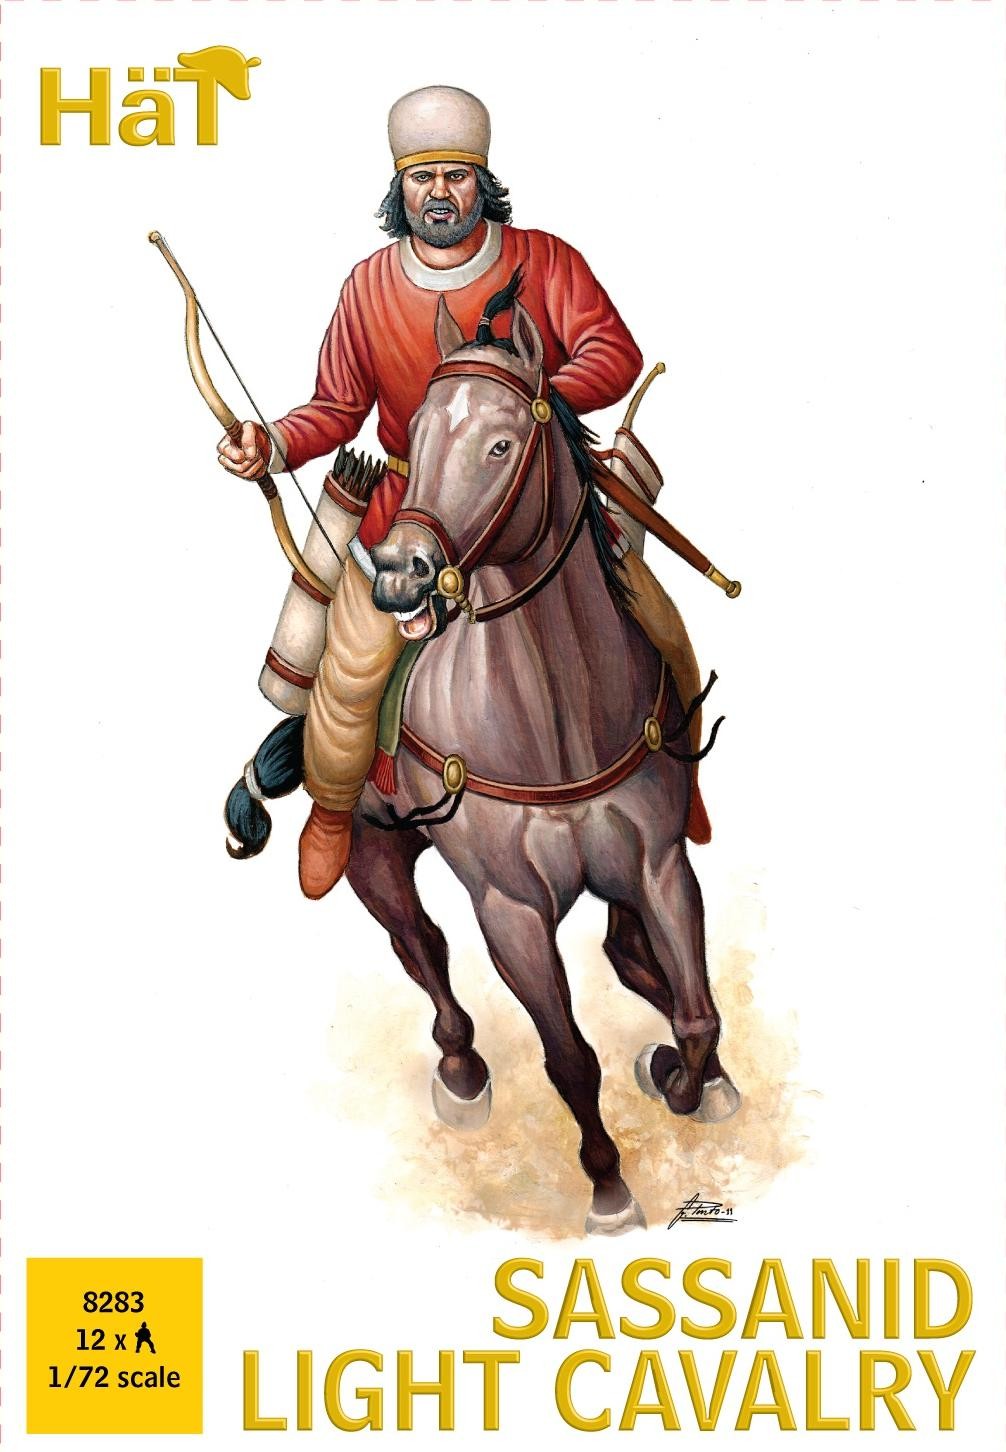 HAT 8283 Sassanid Light Cavalry